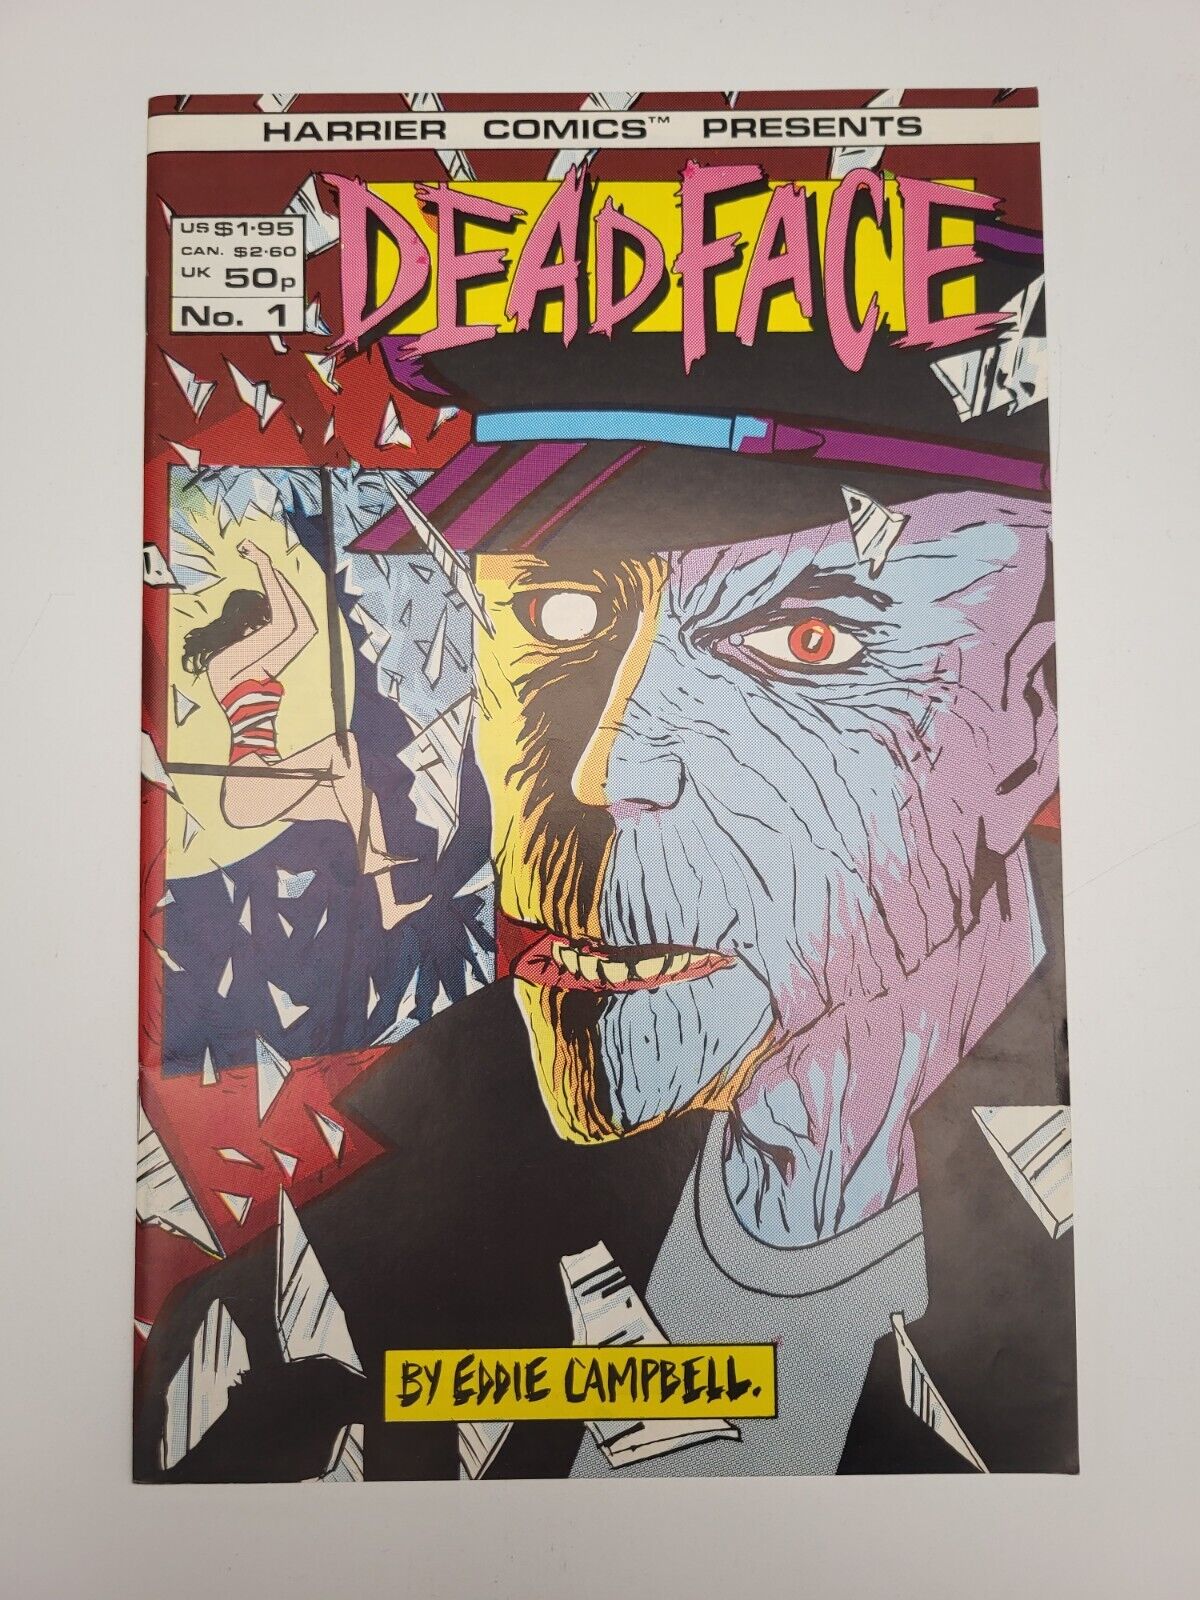 DEADFACE #1 HARRIER COMICS 1987 PRESENTS   BACCHUS EDDIE CAMPBELL Very Rare 